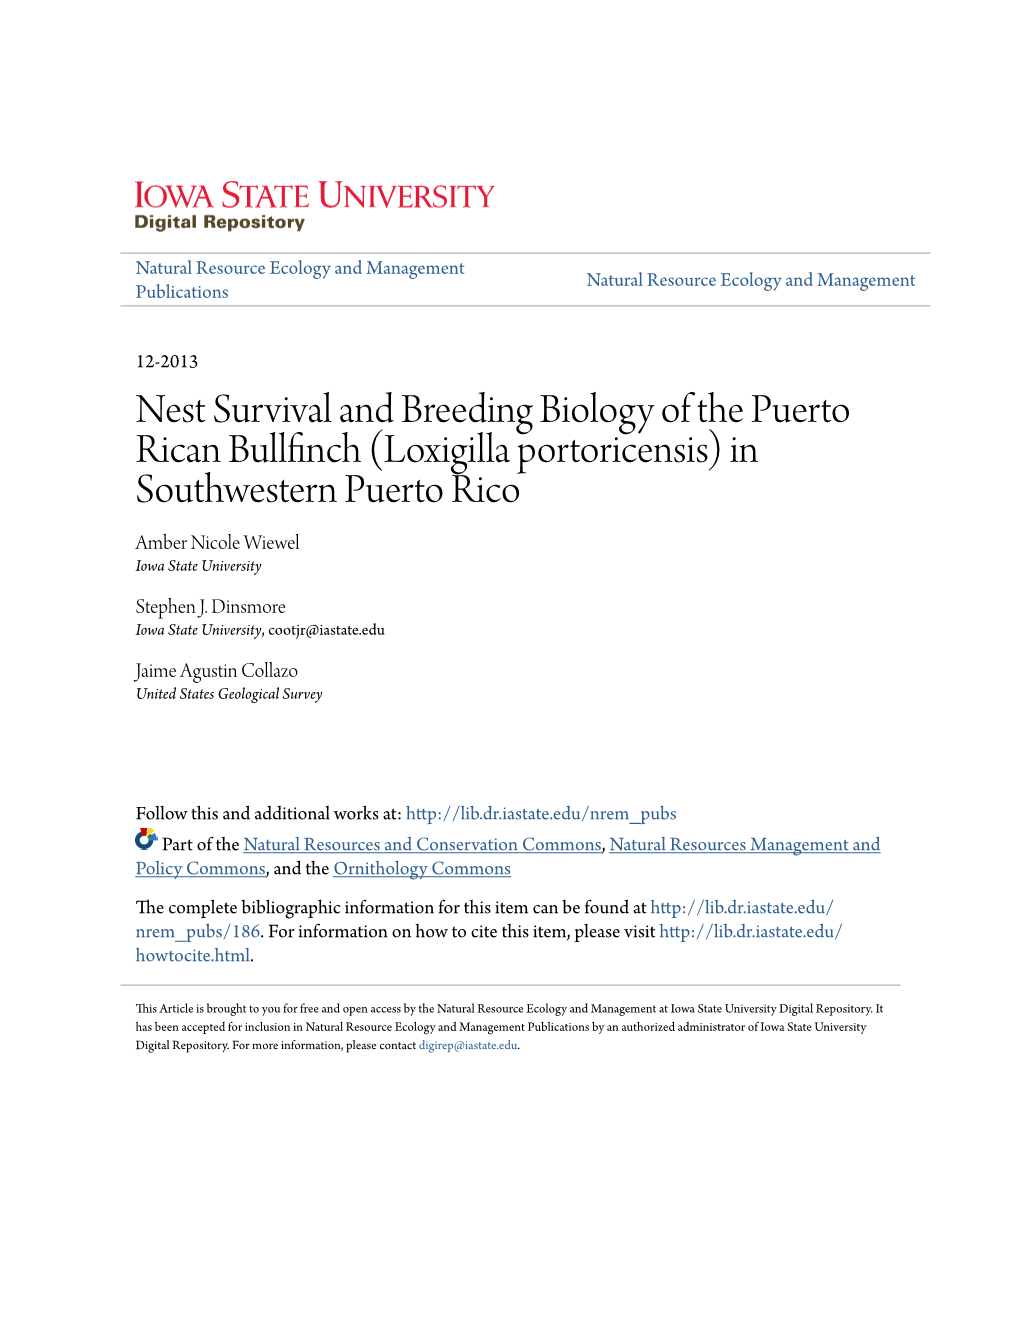 Nest Survival and Breeding Biology of the Puerto Rican Bullfinch (Loxigilla Portoricensis) in Southwestern Puerto Rico